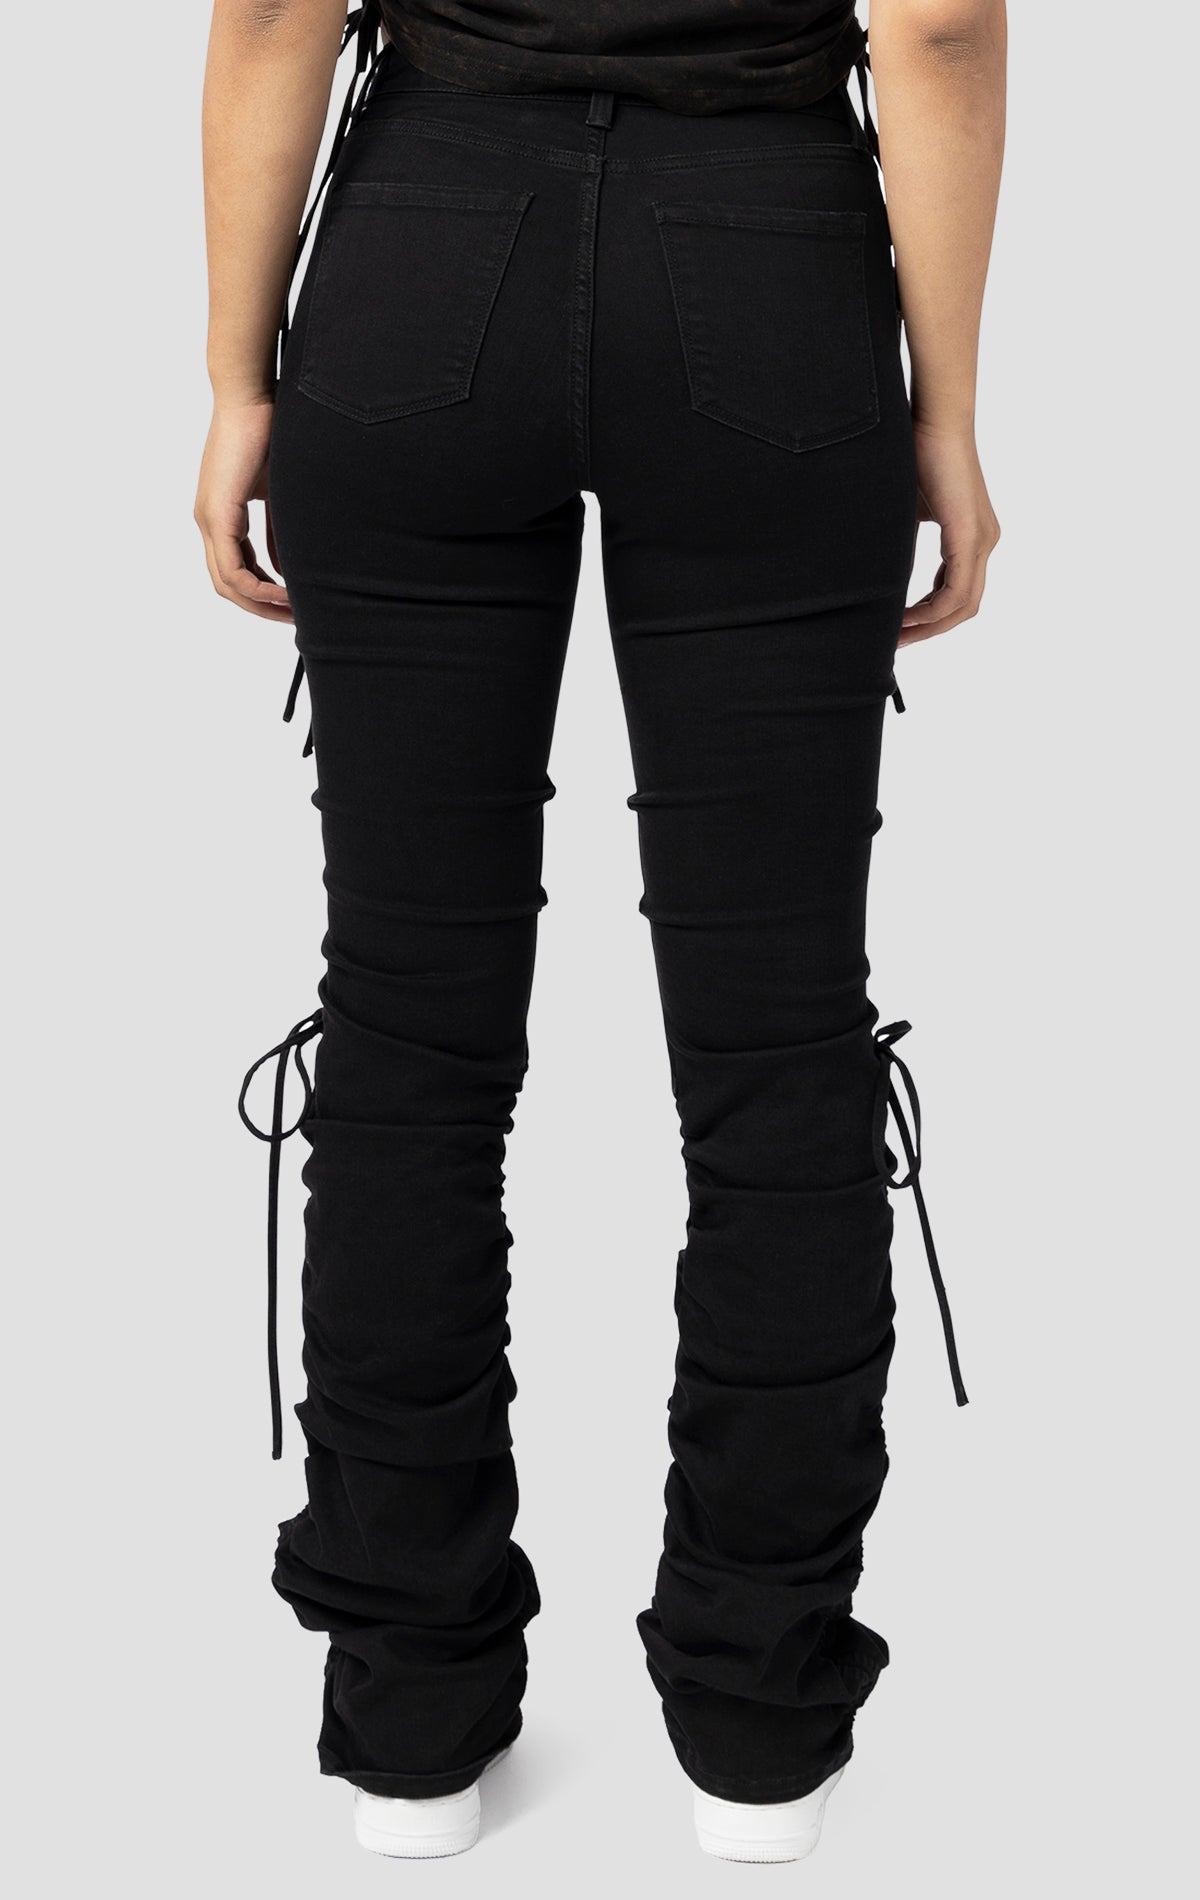 Black High rise strap bootcut twill pants.